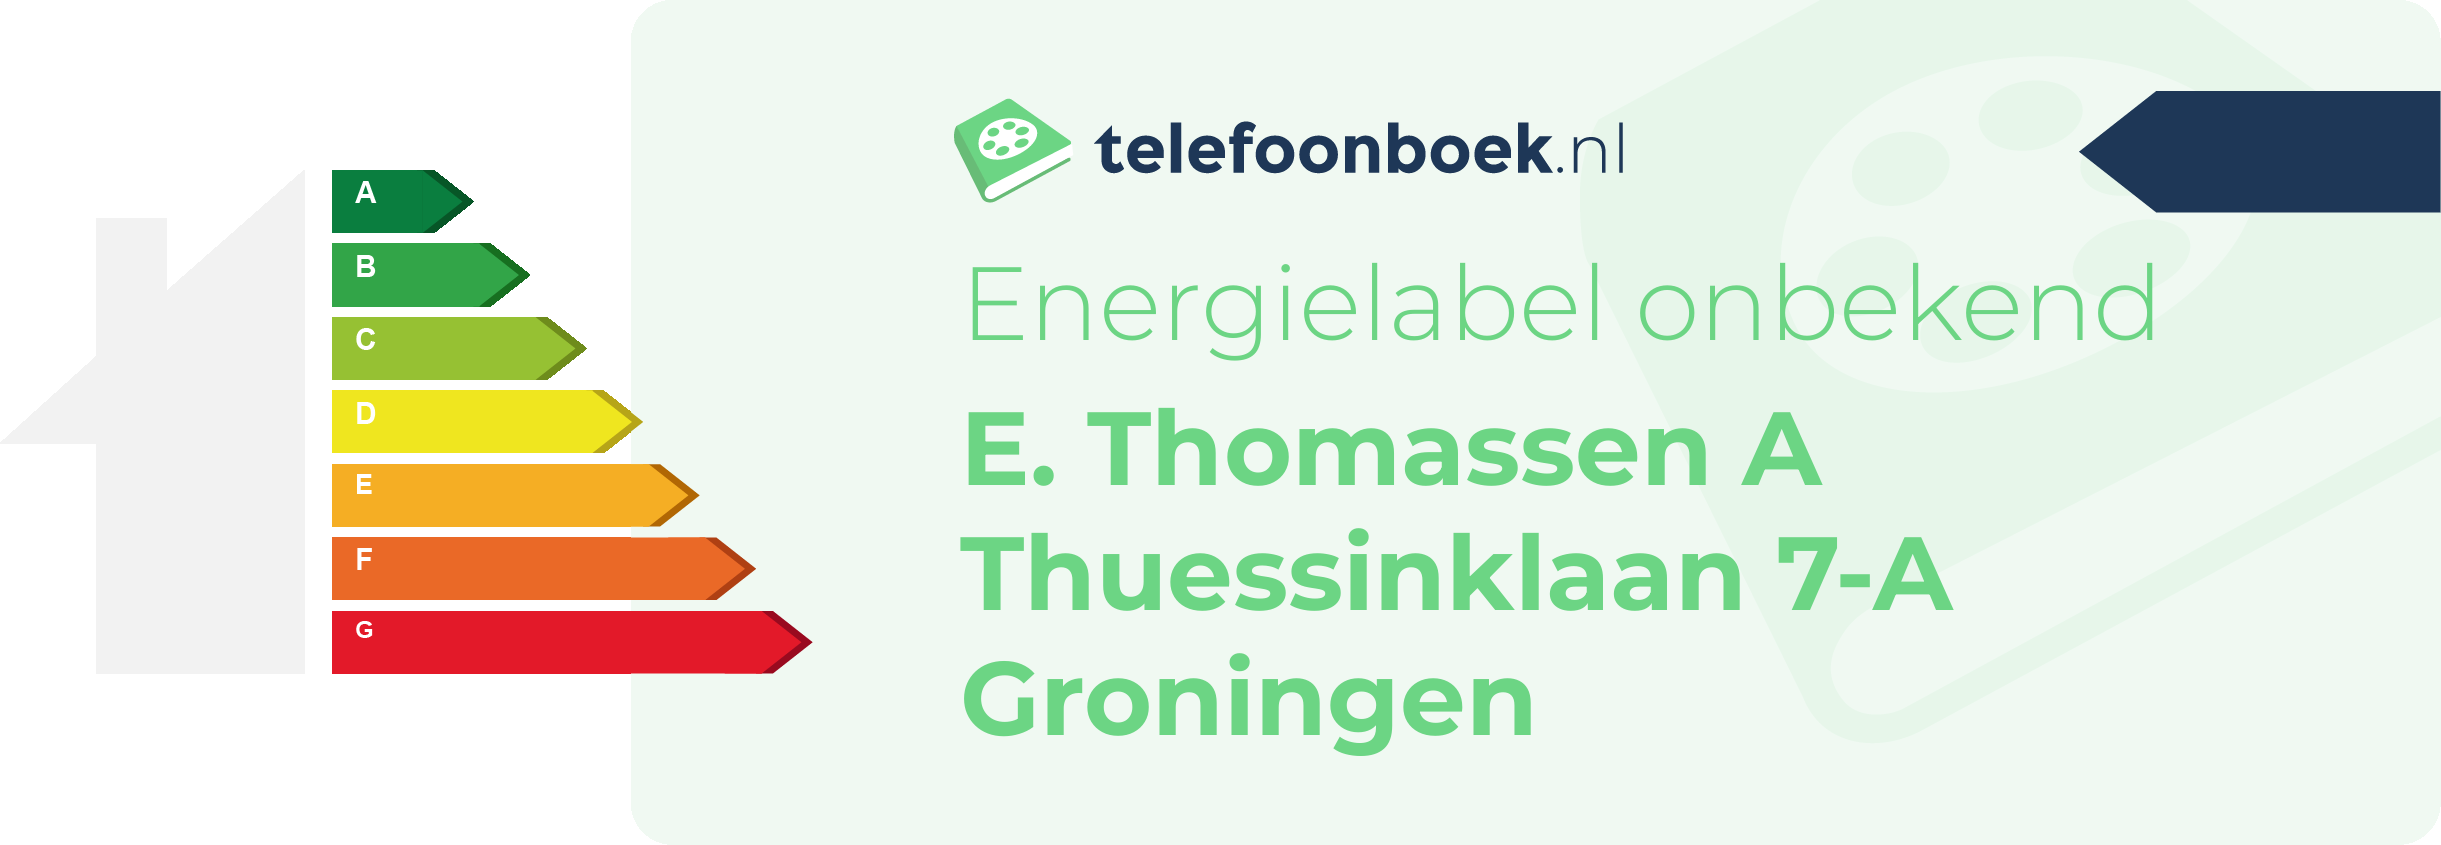 Energielabel E. Thomassen A Thuessinklaan 7-A Groningen